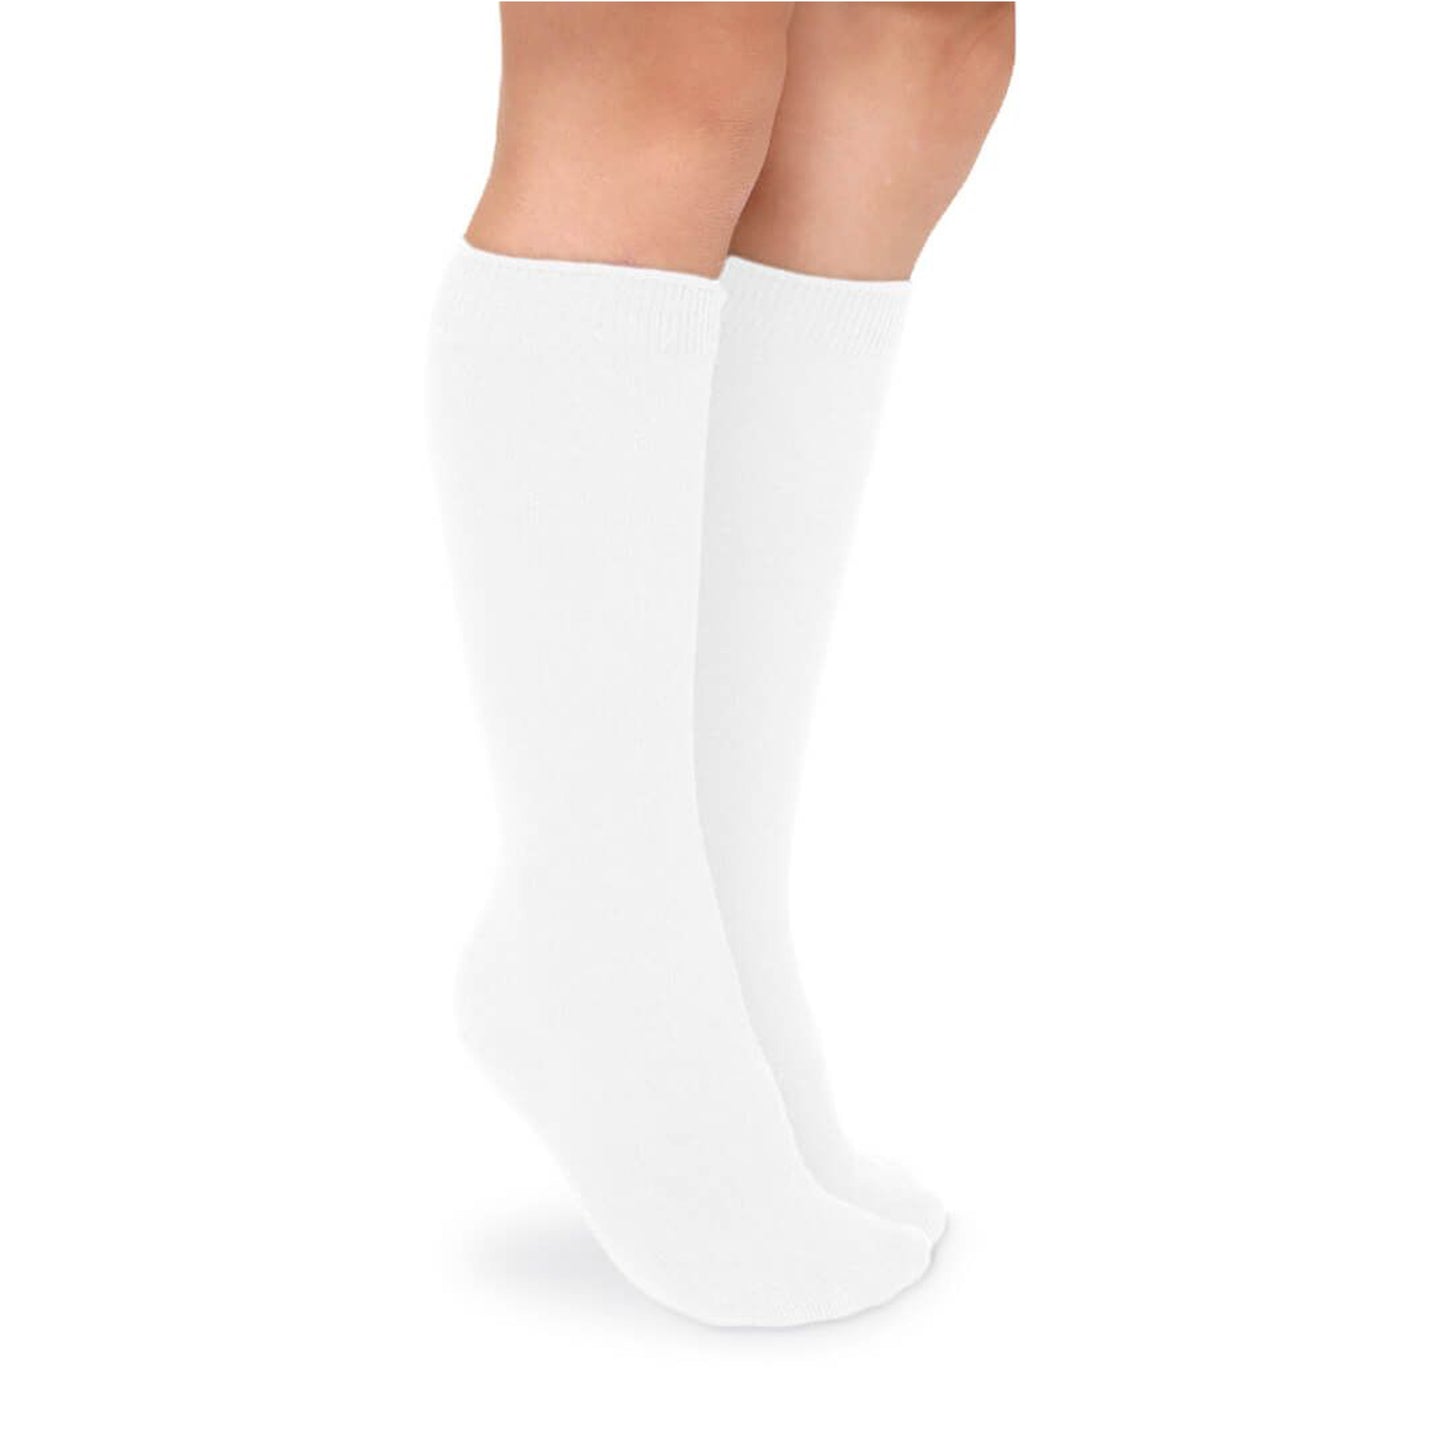 Smooth Toe Cotton Knee High Socks 2 Pair Pack